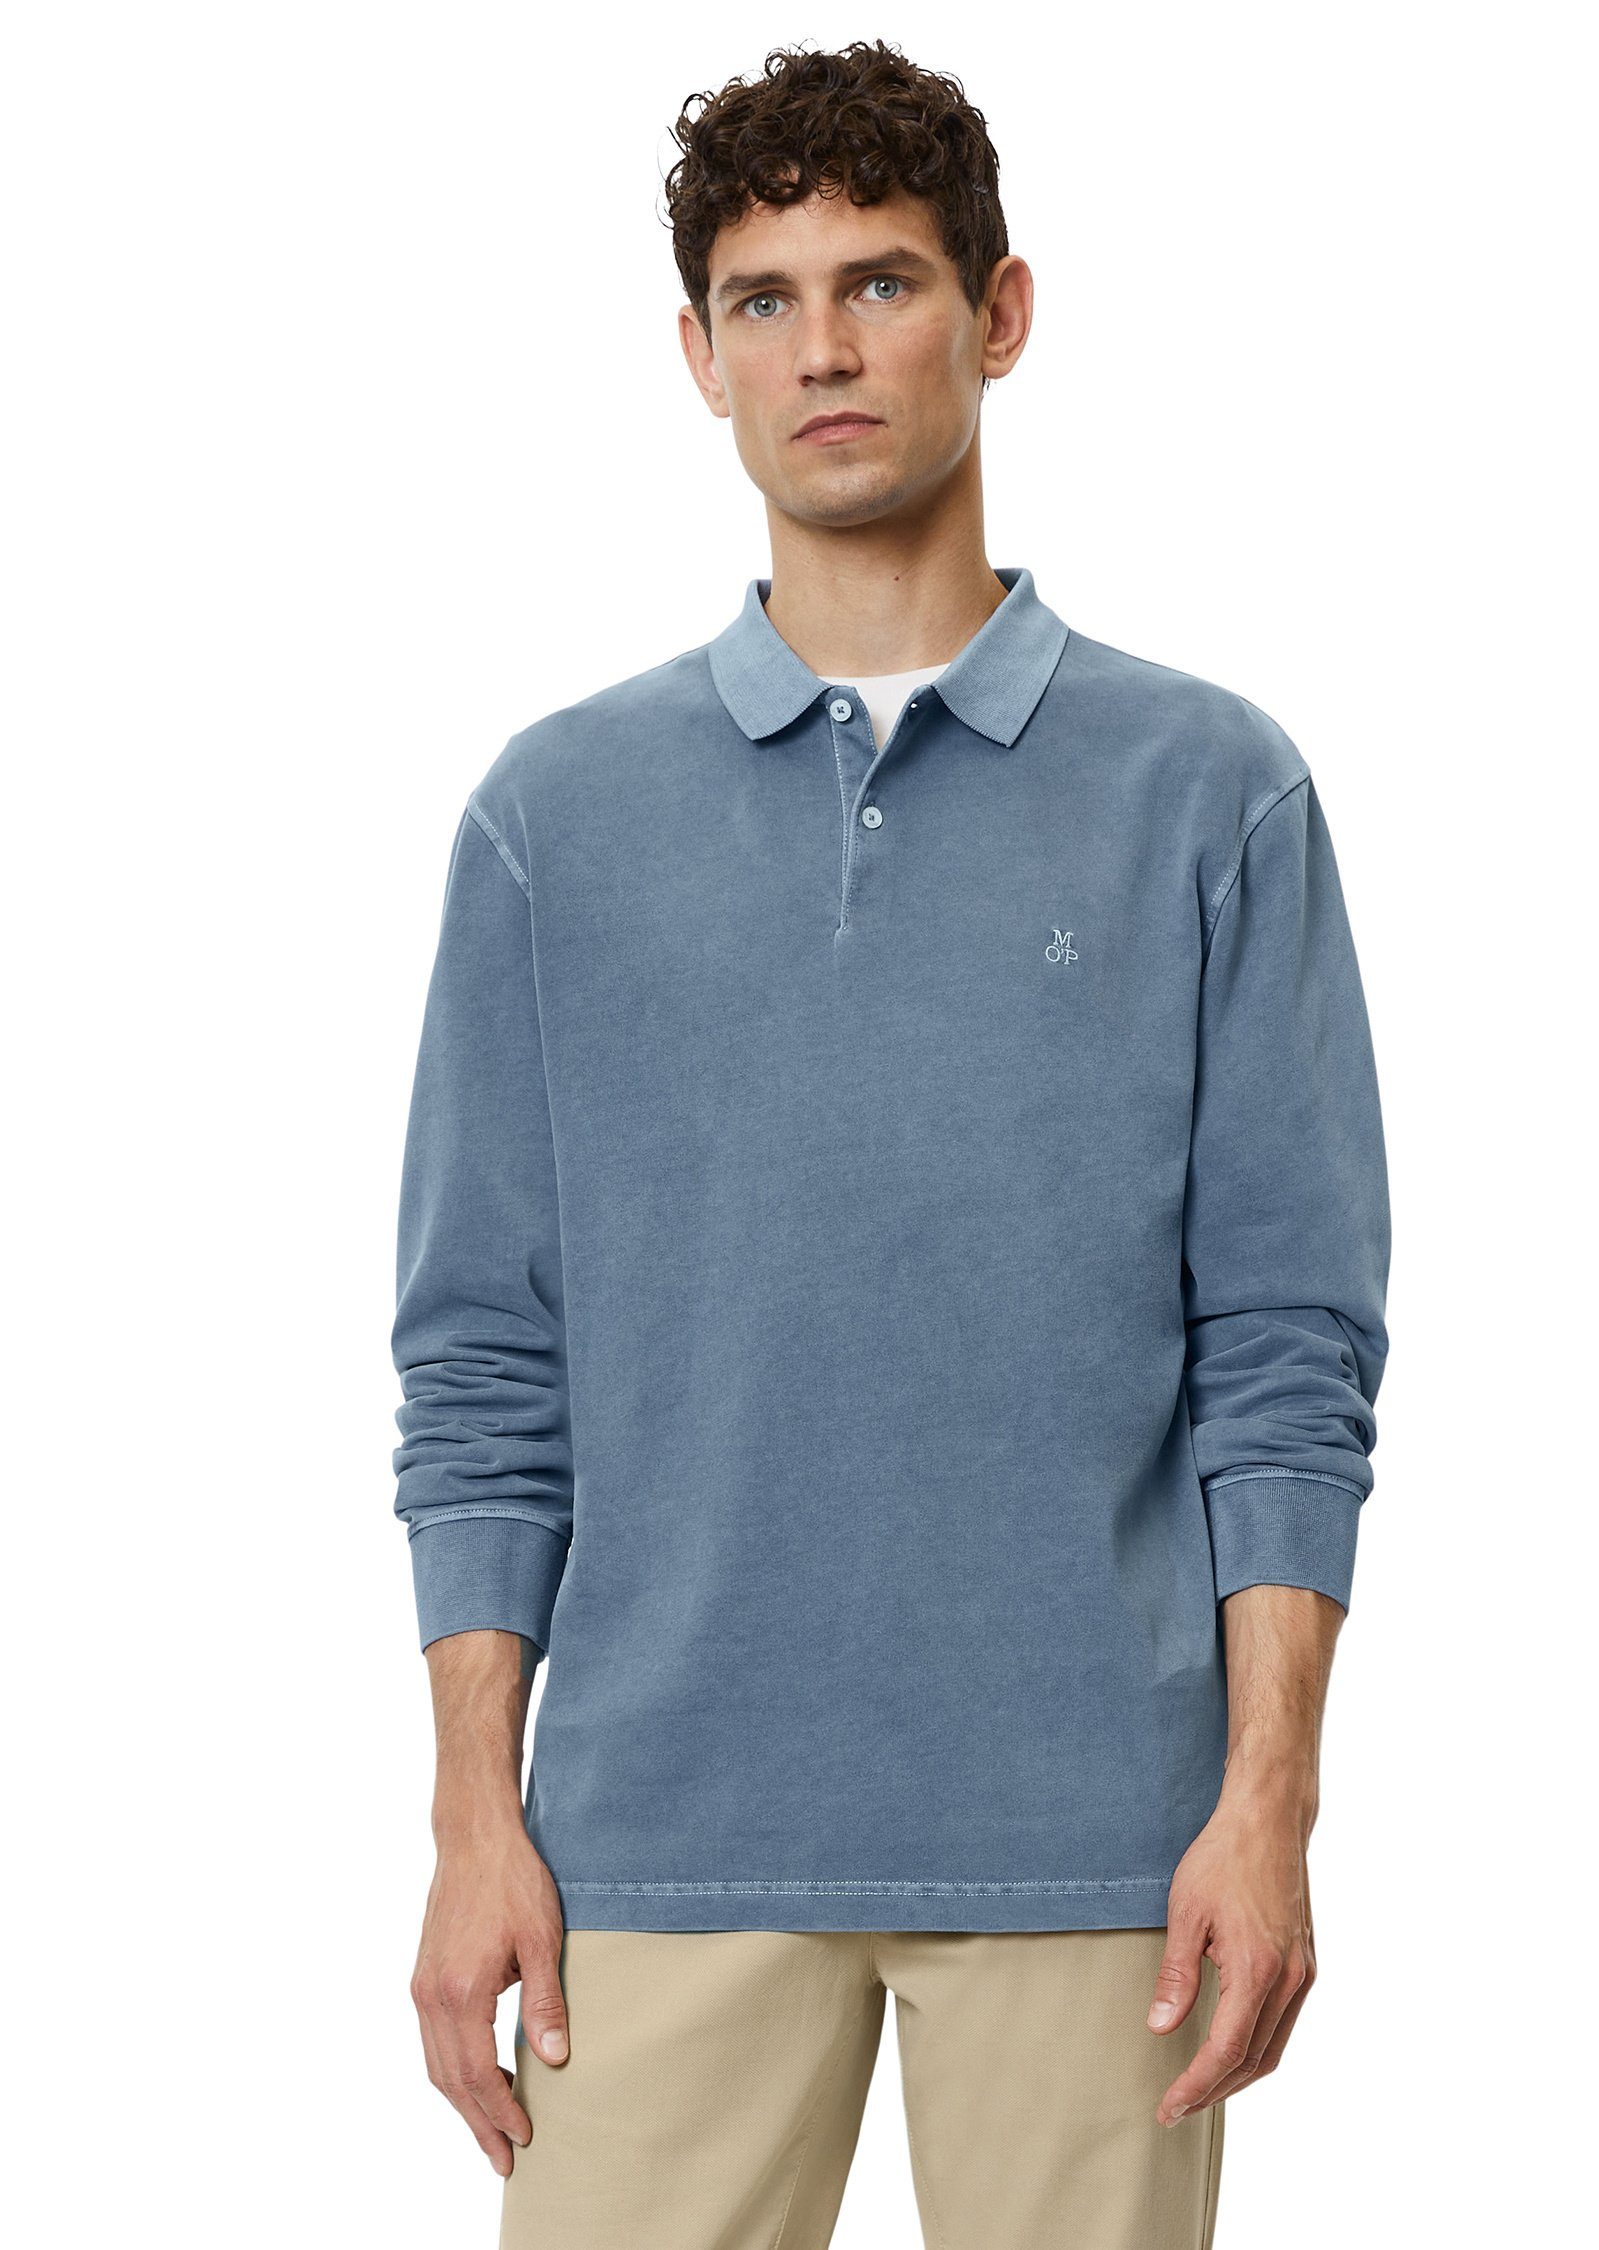 O'Polo Langarm-Poloshirt Marc schwerer blau in Soft-Touch-Jersey-Qualität